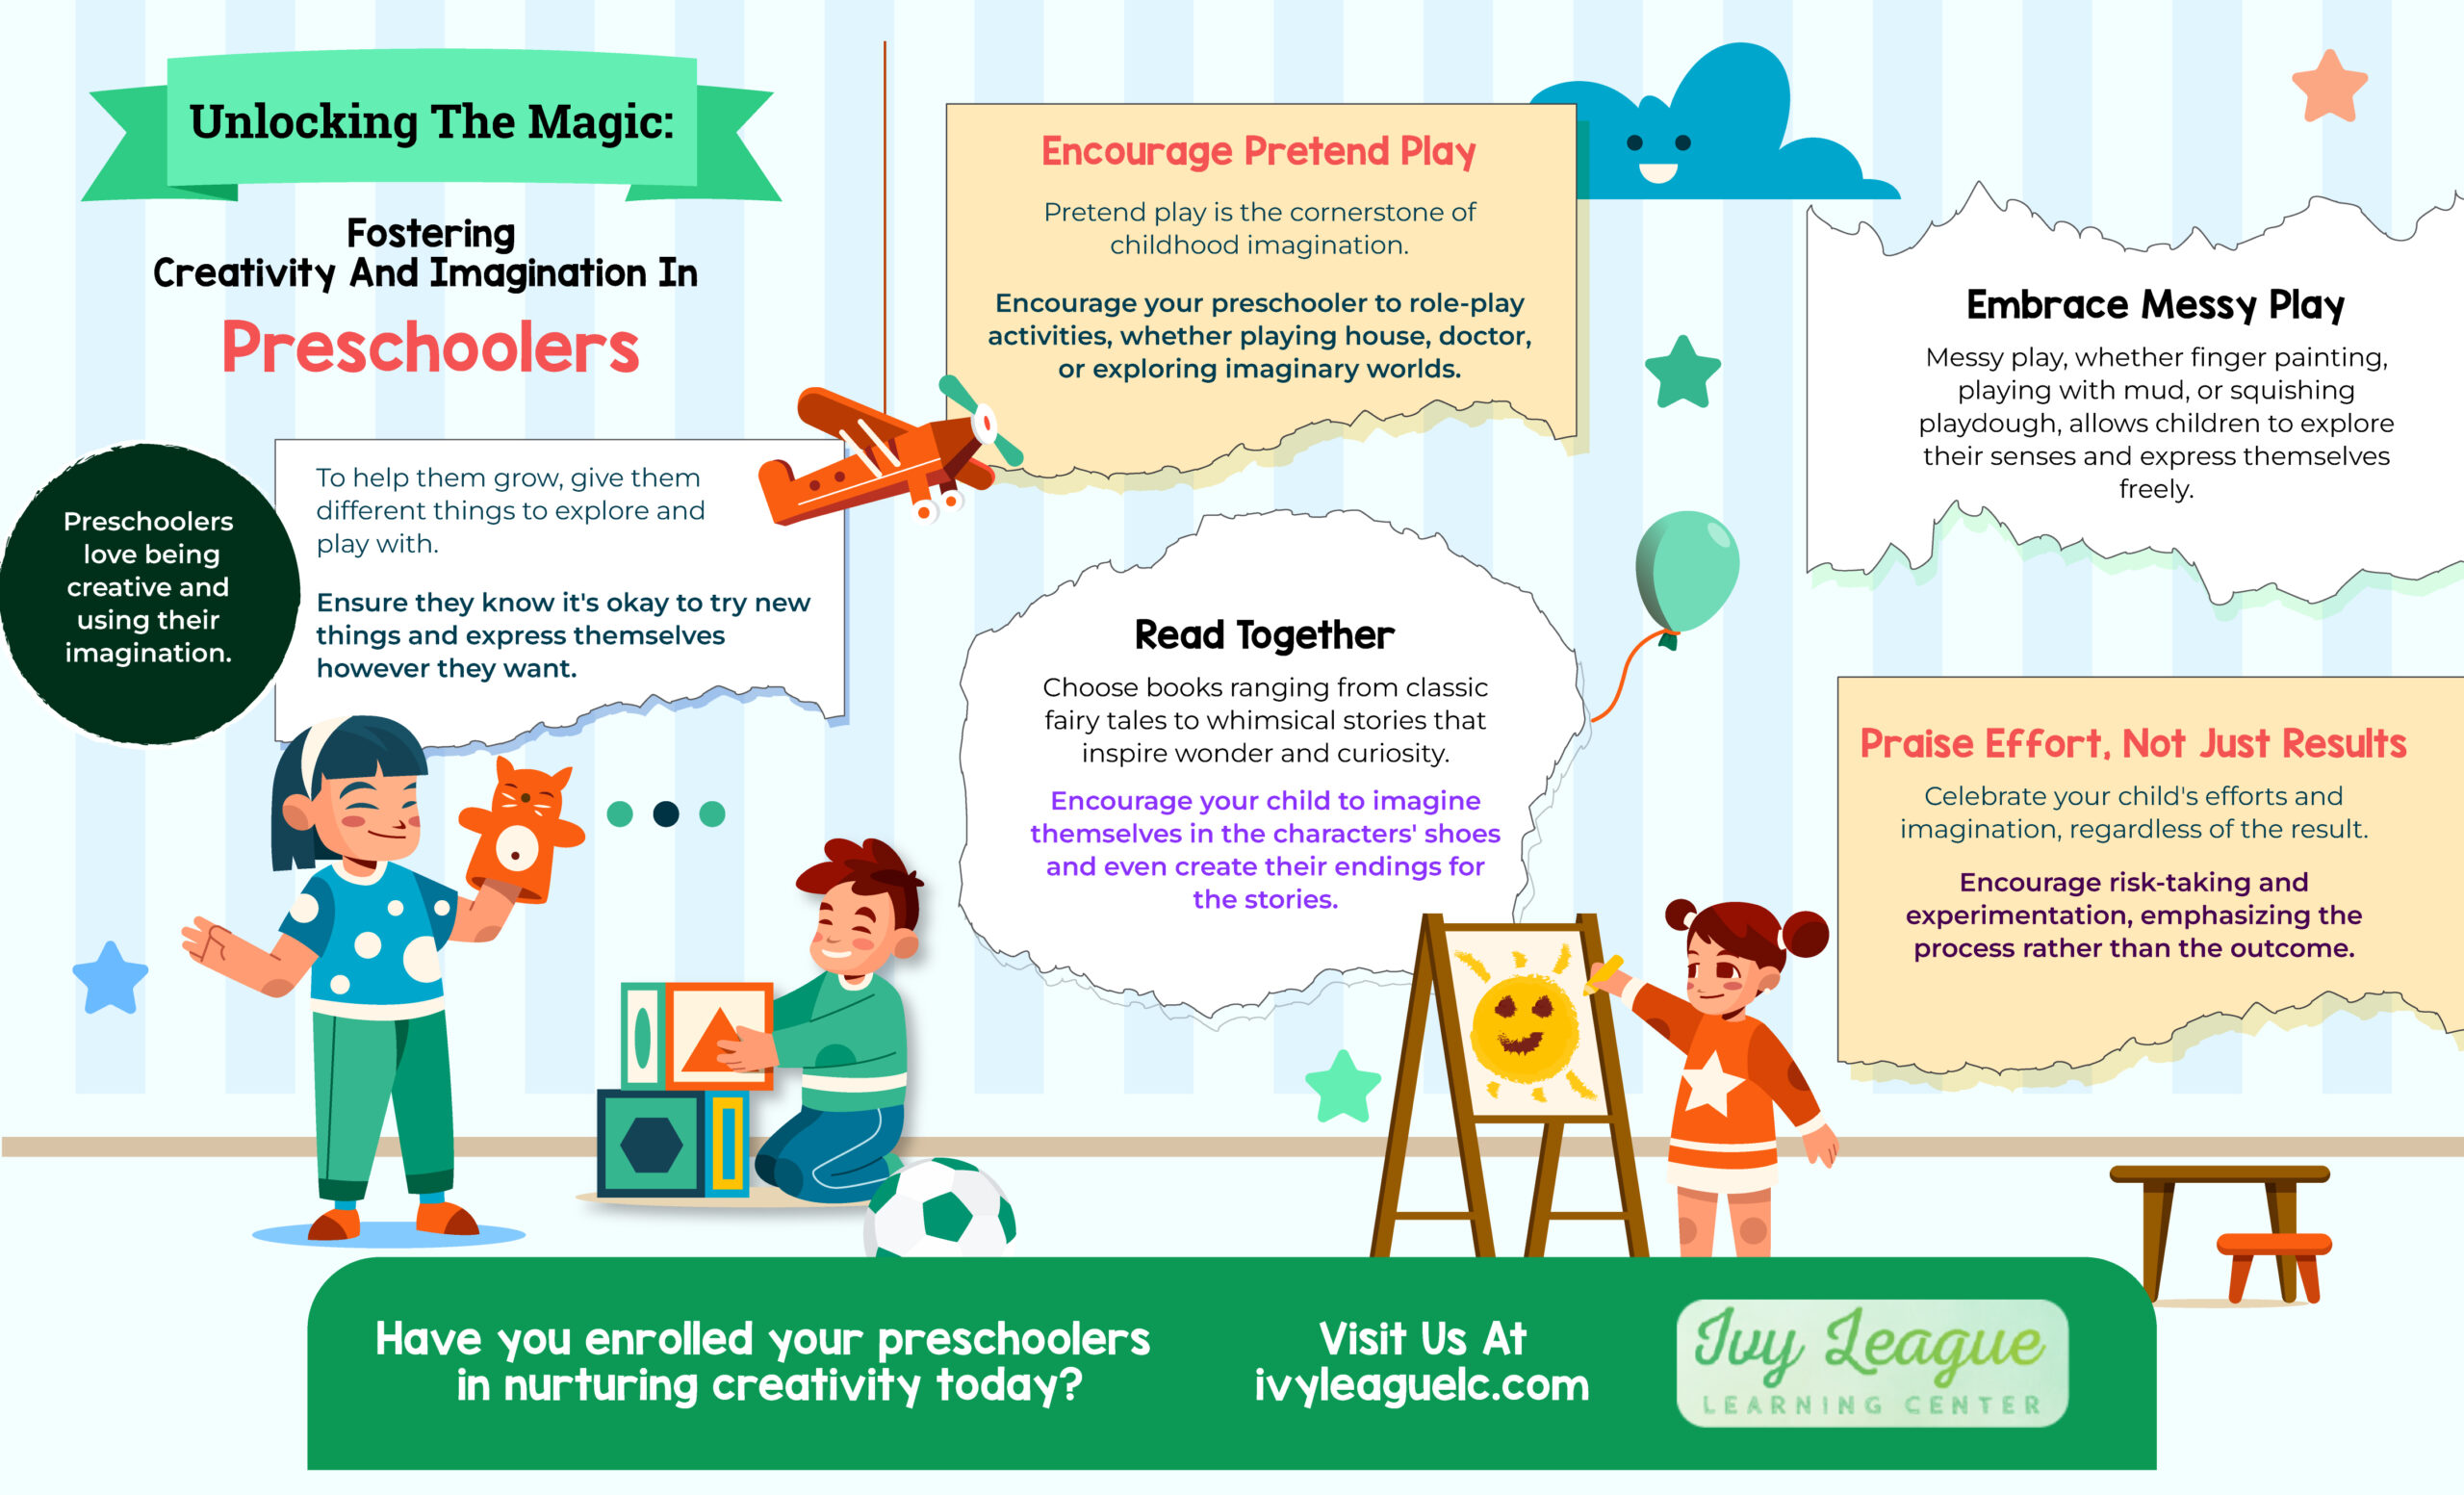 Unlocking the Magic: Fostering Creativity and Imagination in Preschoolers